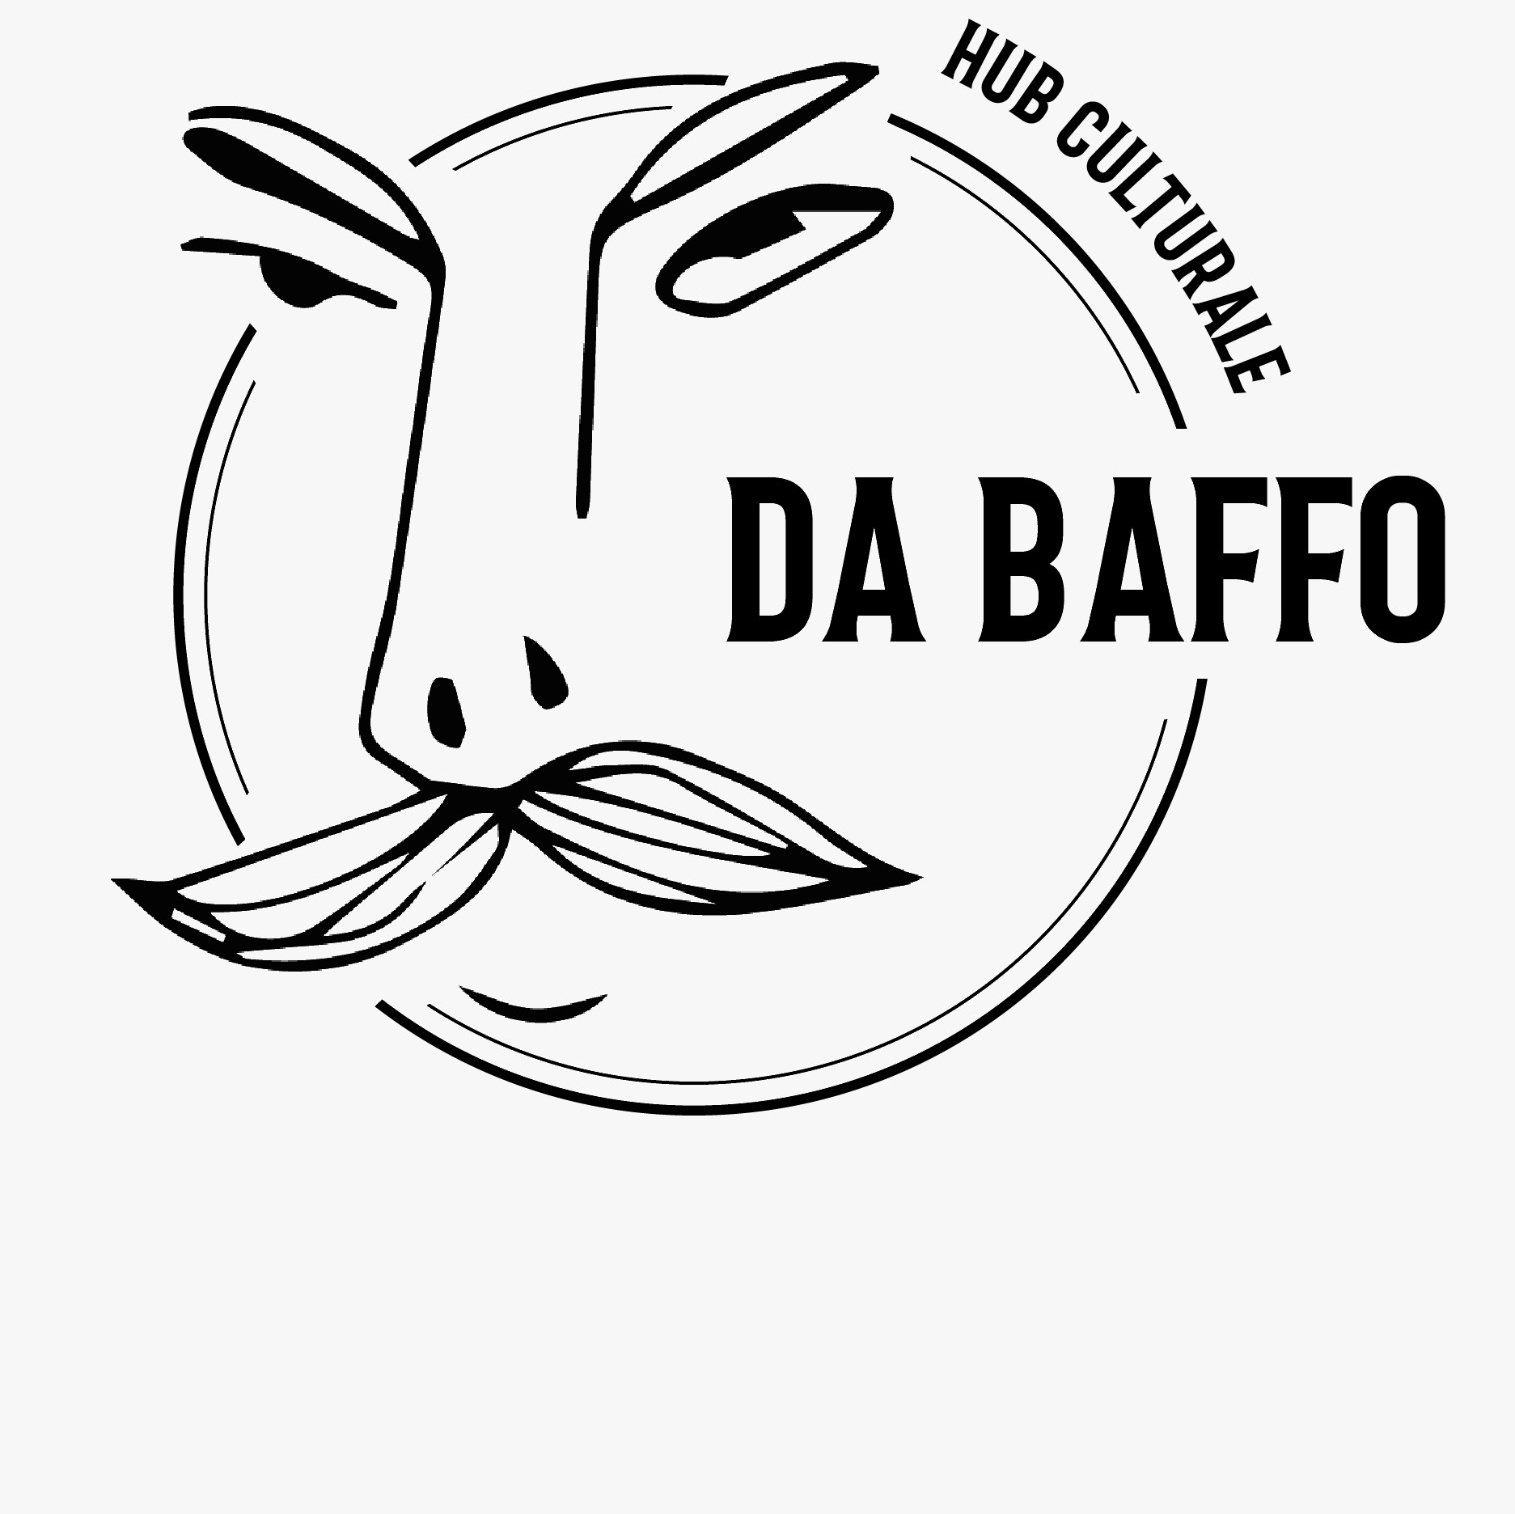 Musica e dj set da Baffo hub culturale